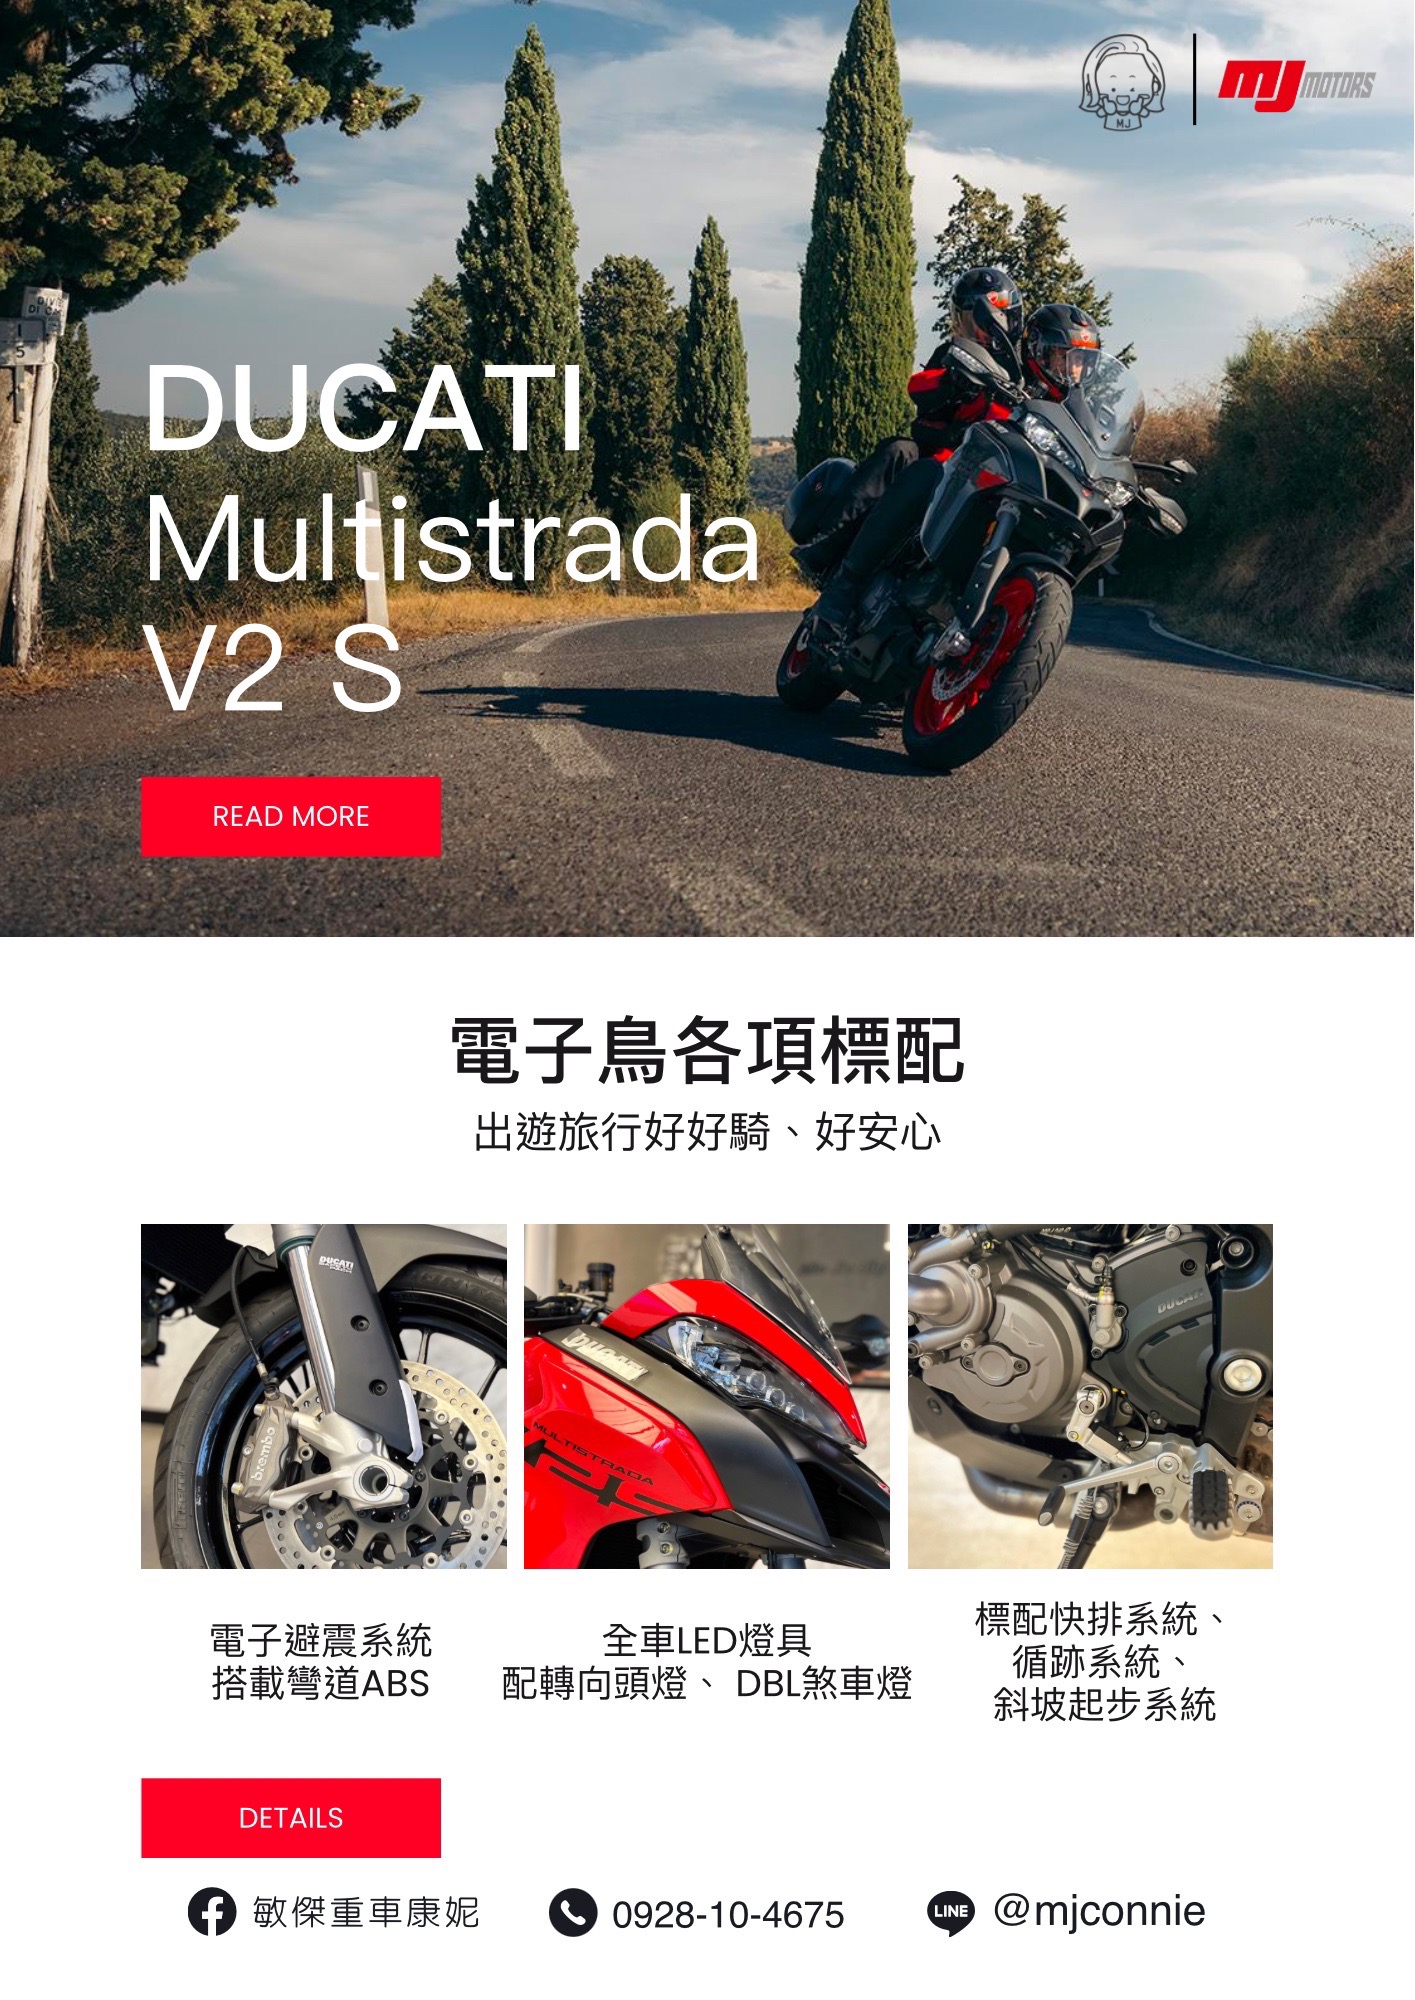 Ducati Multistrada V2s新車出售中 『敏傑康妮』Ducati Multistrada V2 S  帶您往戶外景點走走~ 輕鬆克服不平路面 價格以實際為主 | 敏傑車業資深銷售專員 康妮 Connie